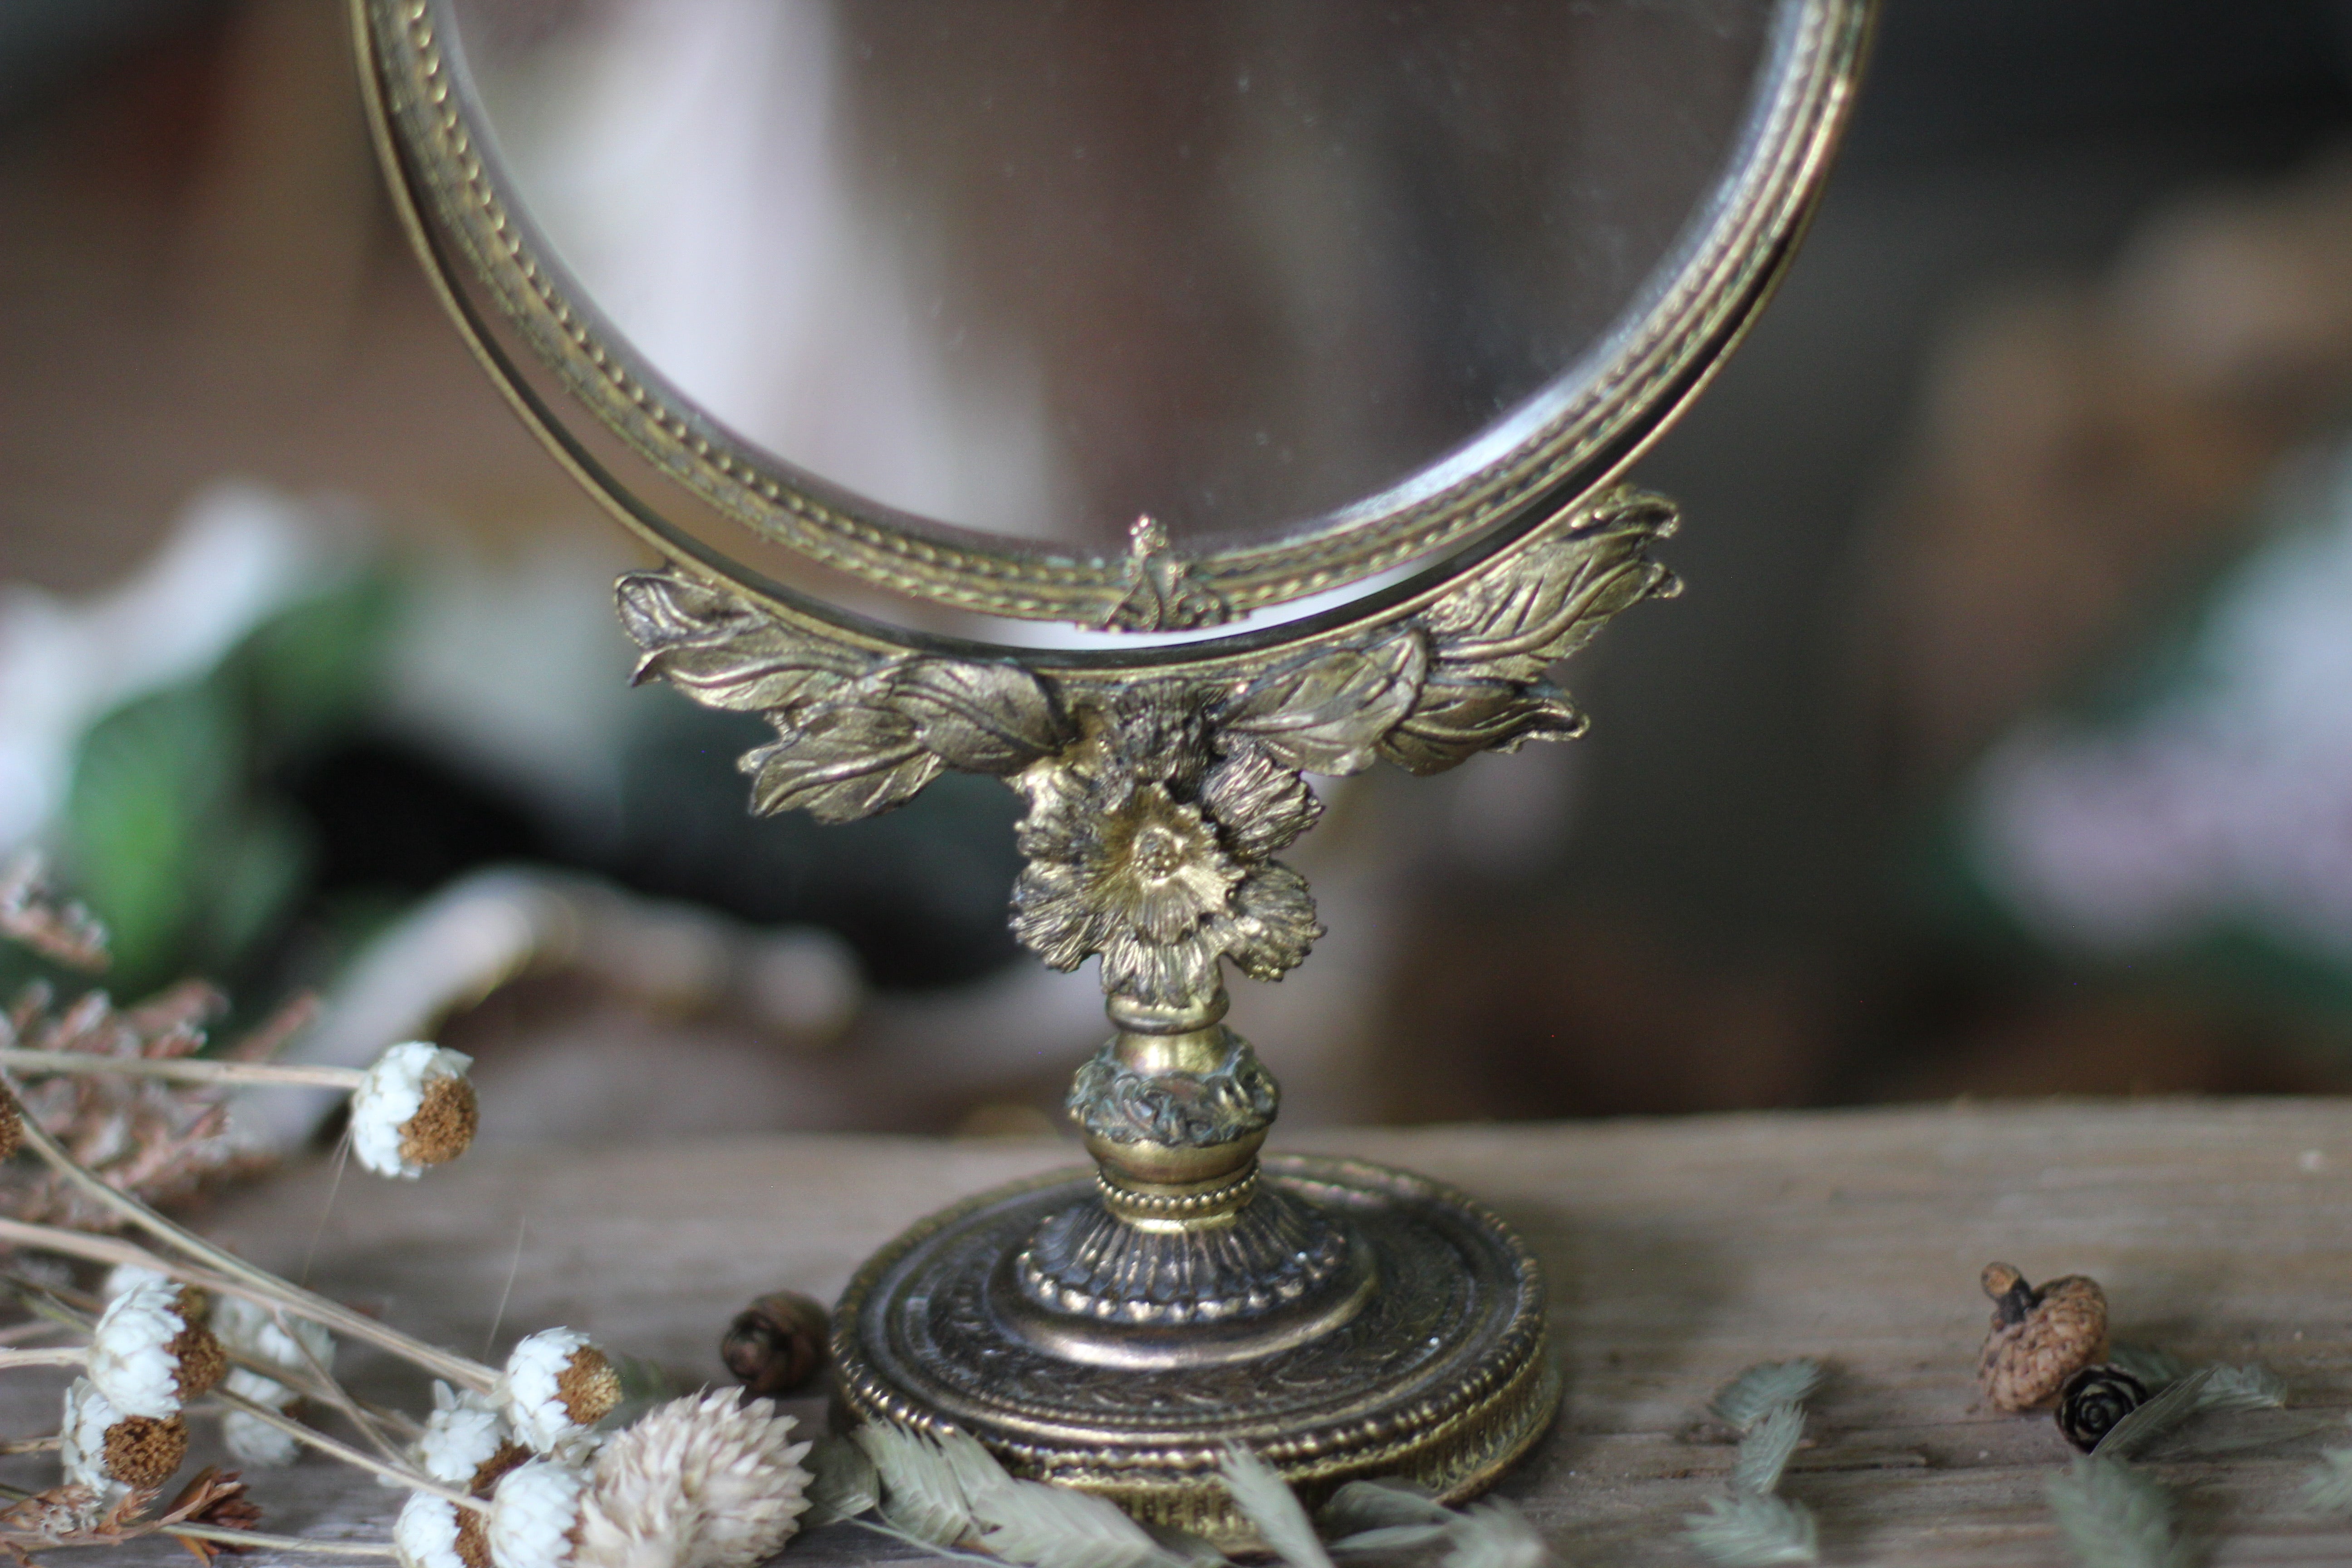 Vintage Floral Standing Vanity Mirror 2 Sided Magnifier